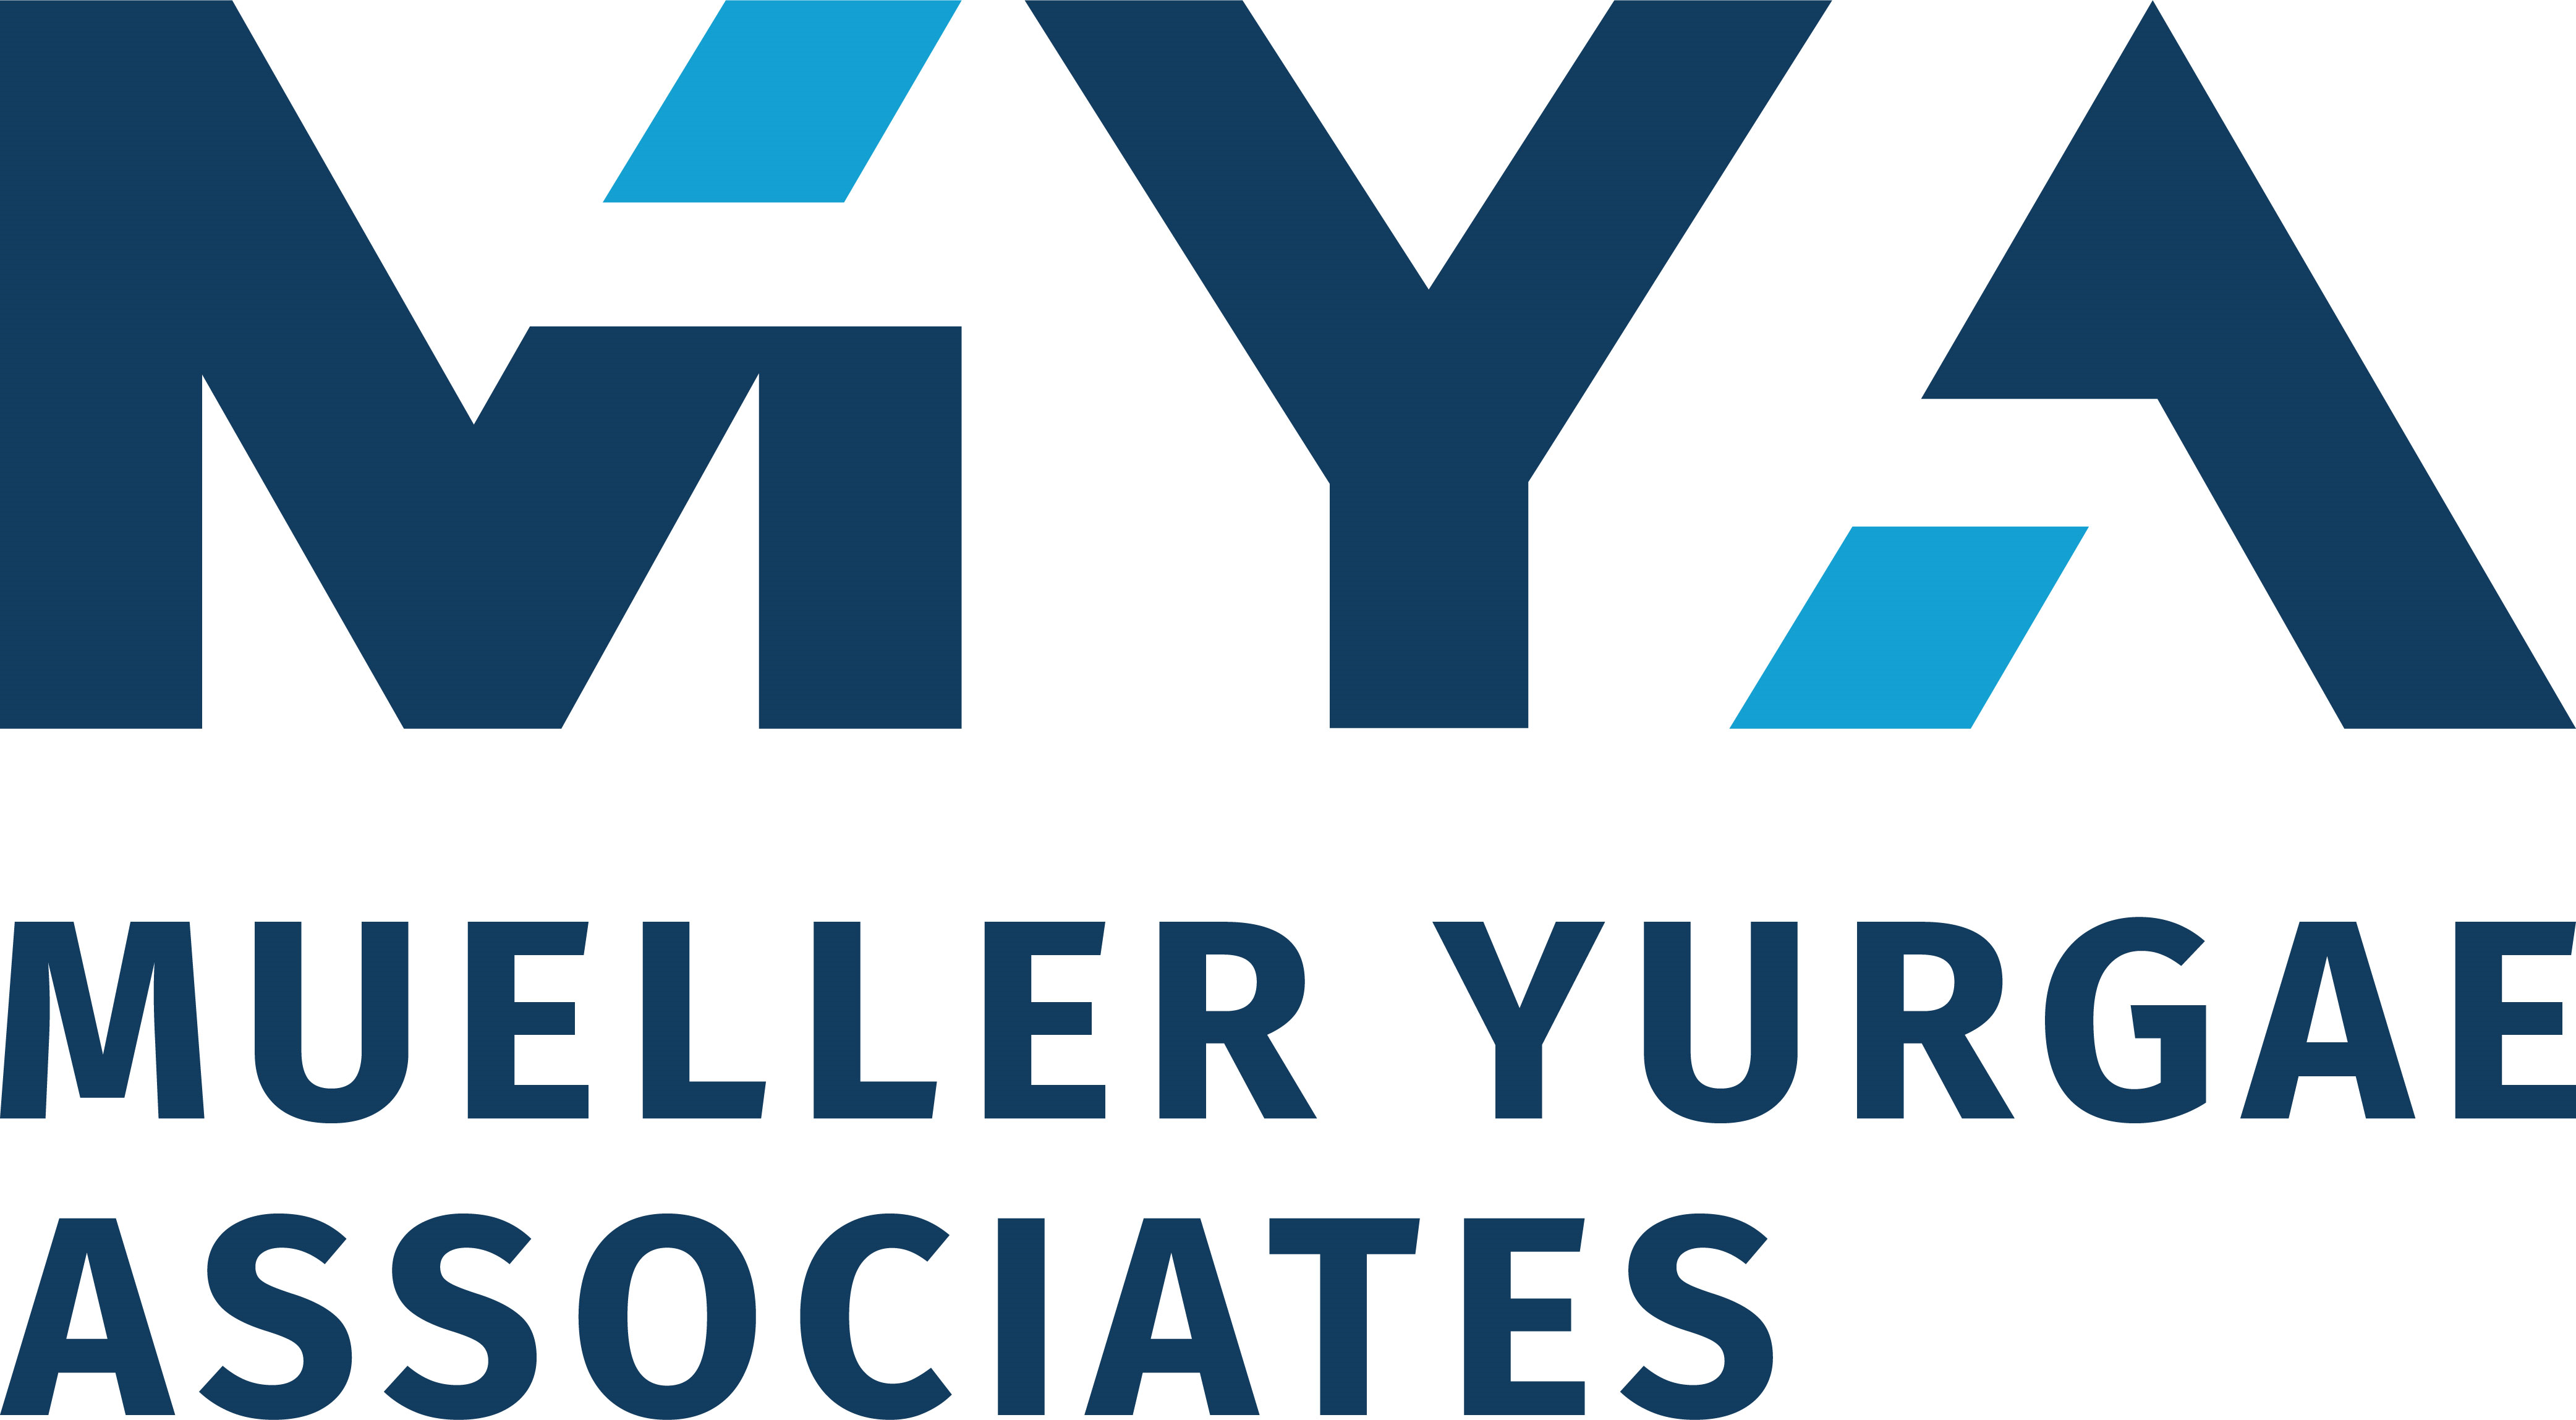 Mueller Yurgae Associates (MYA) logo